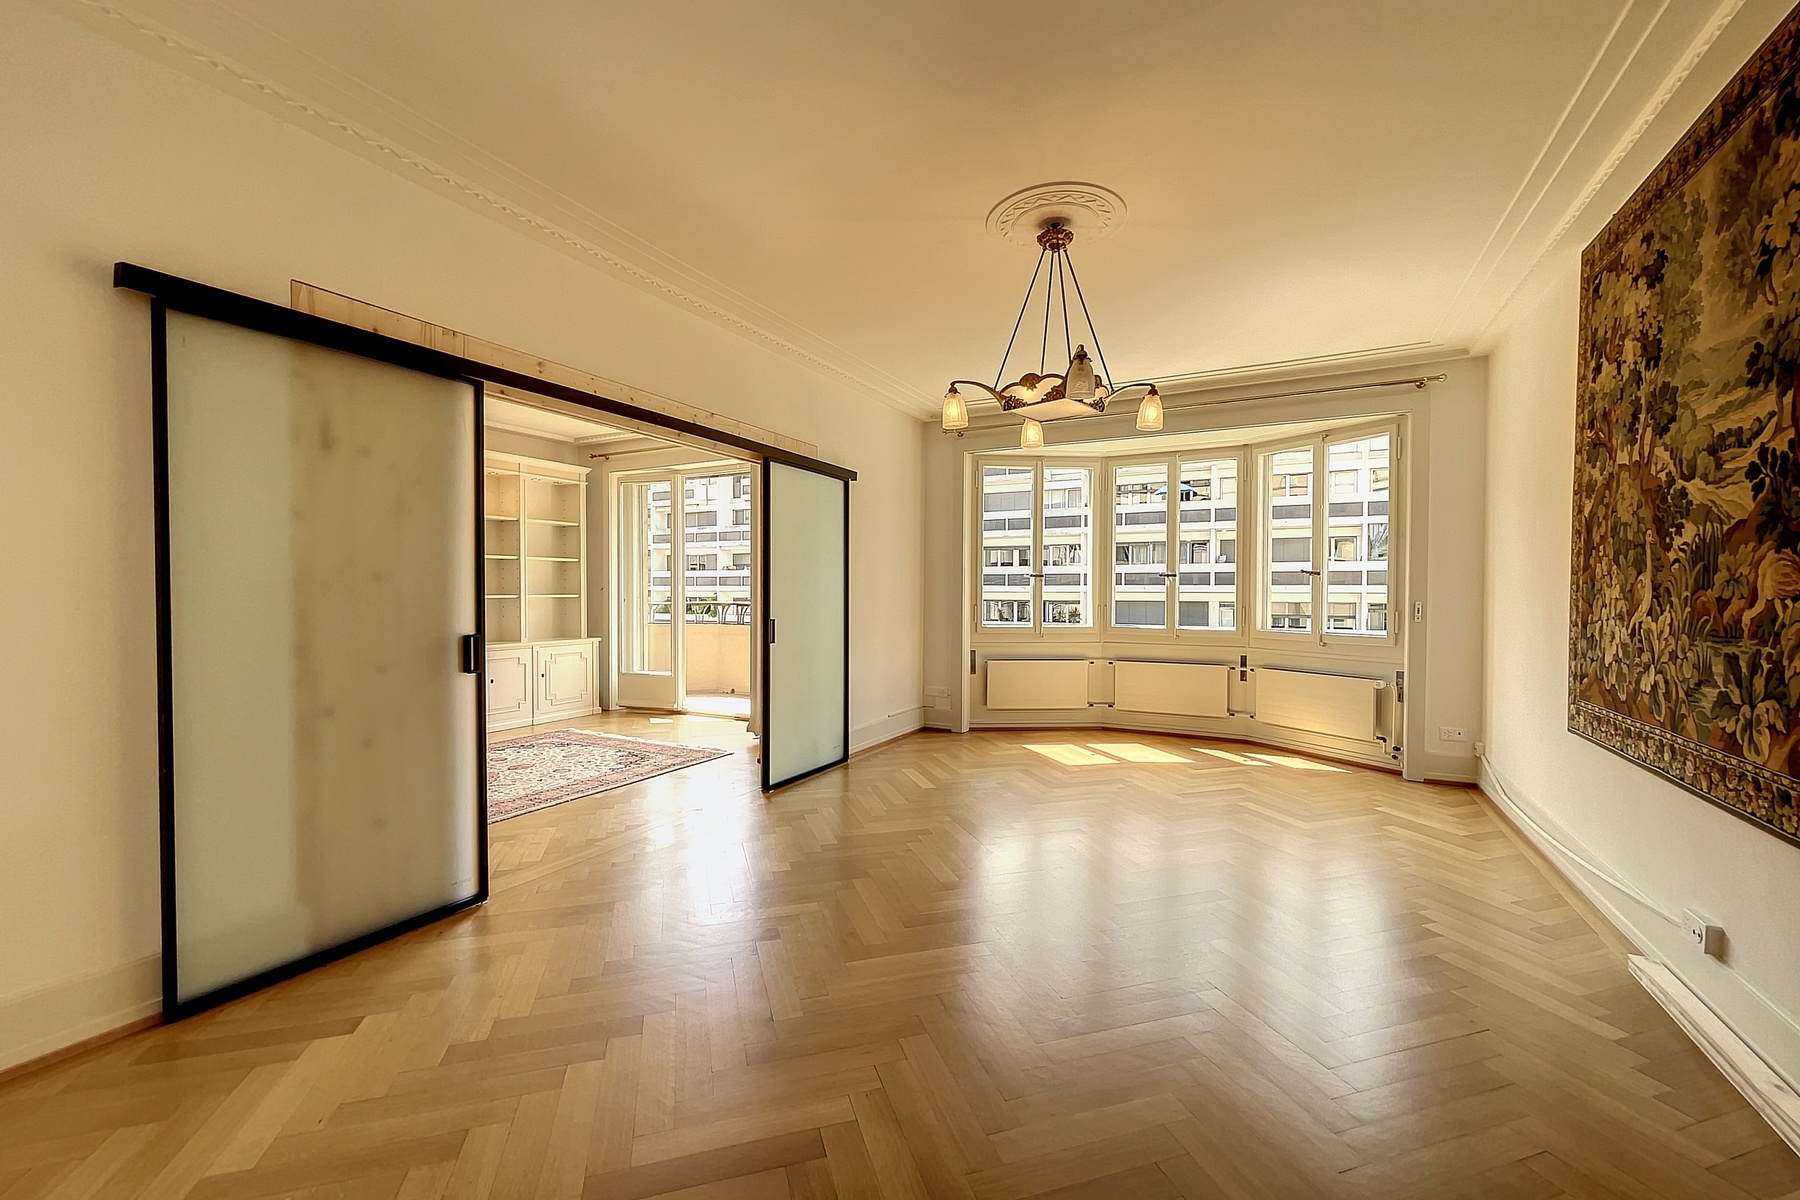 Splendid Haussmann-style apartment of approx. 200 m2 (2,153 sq ft)